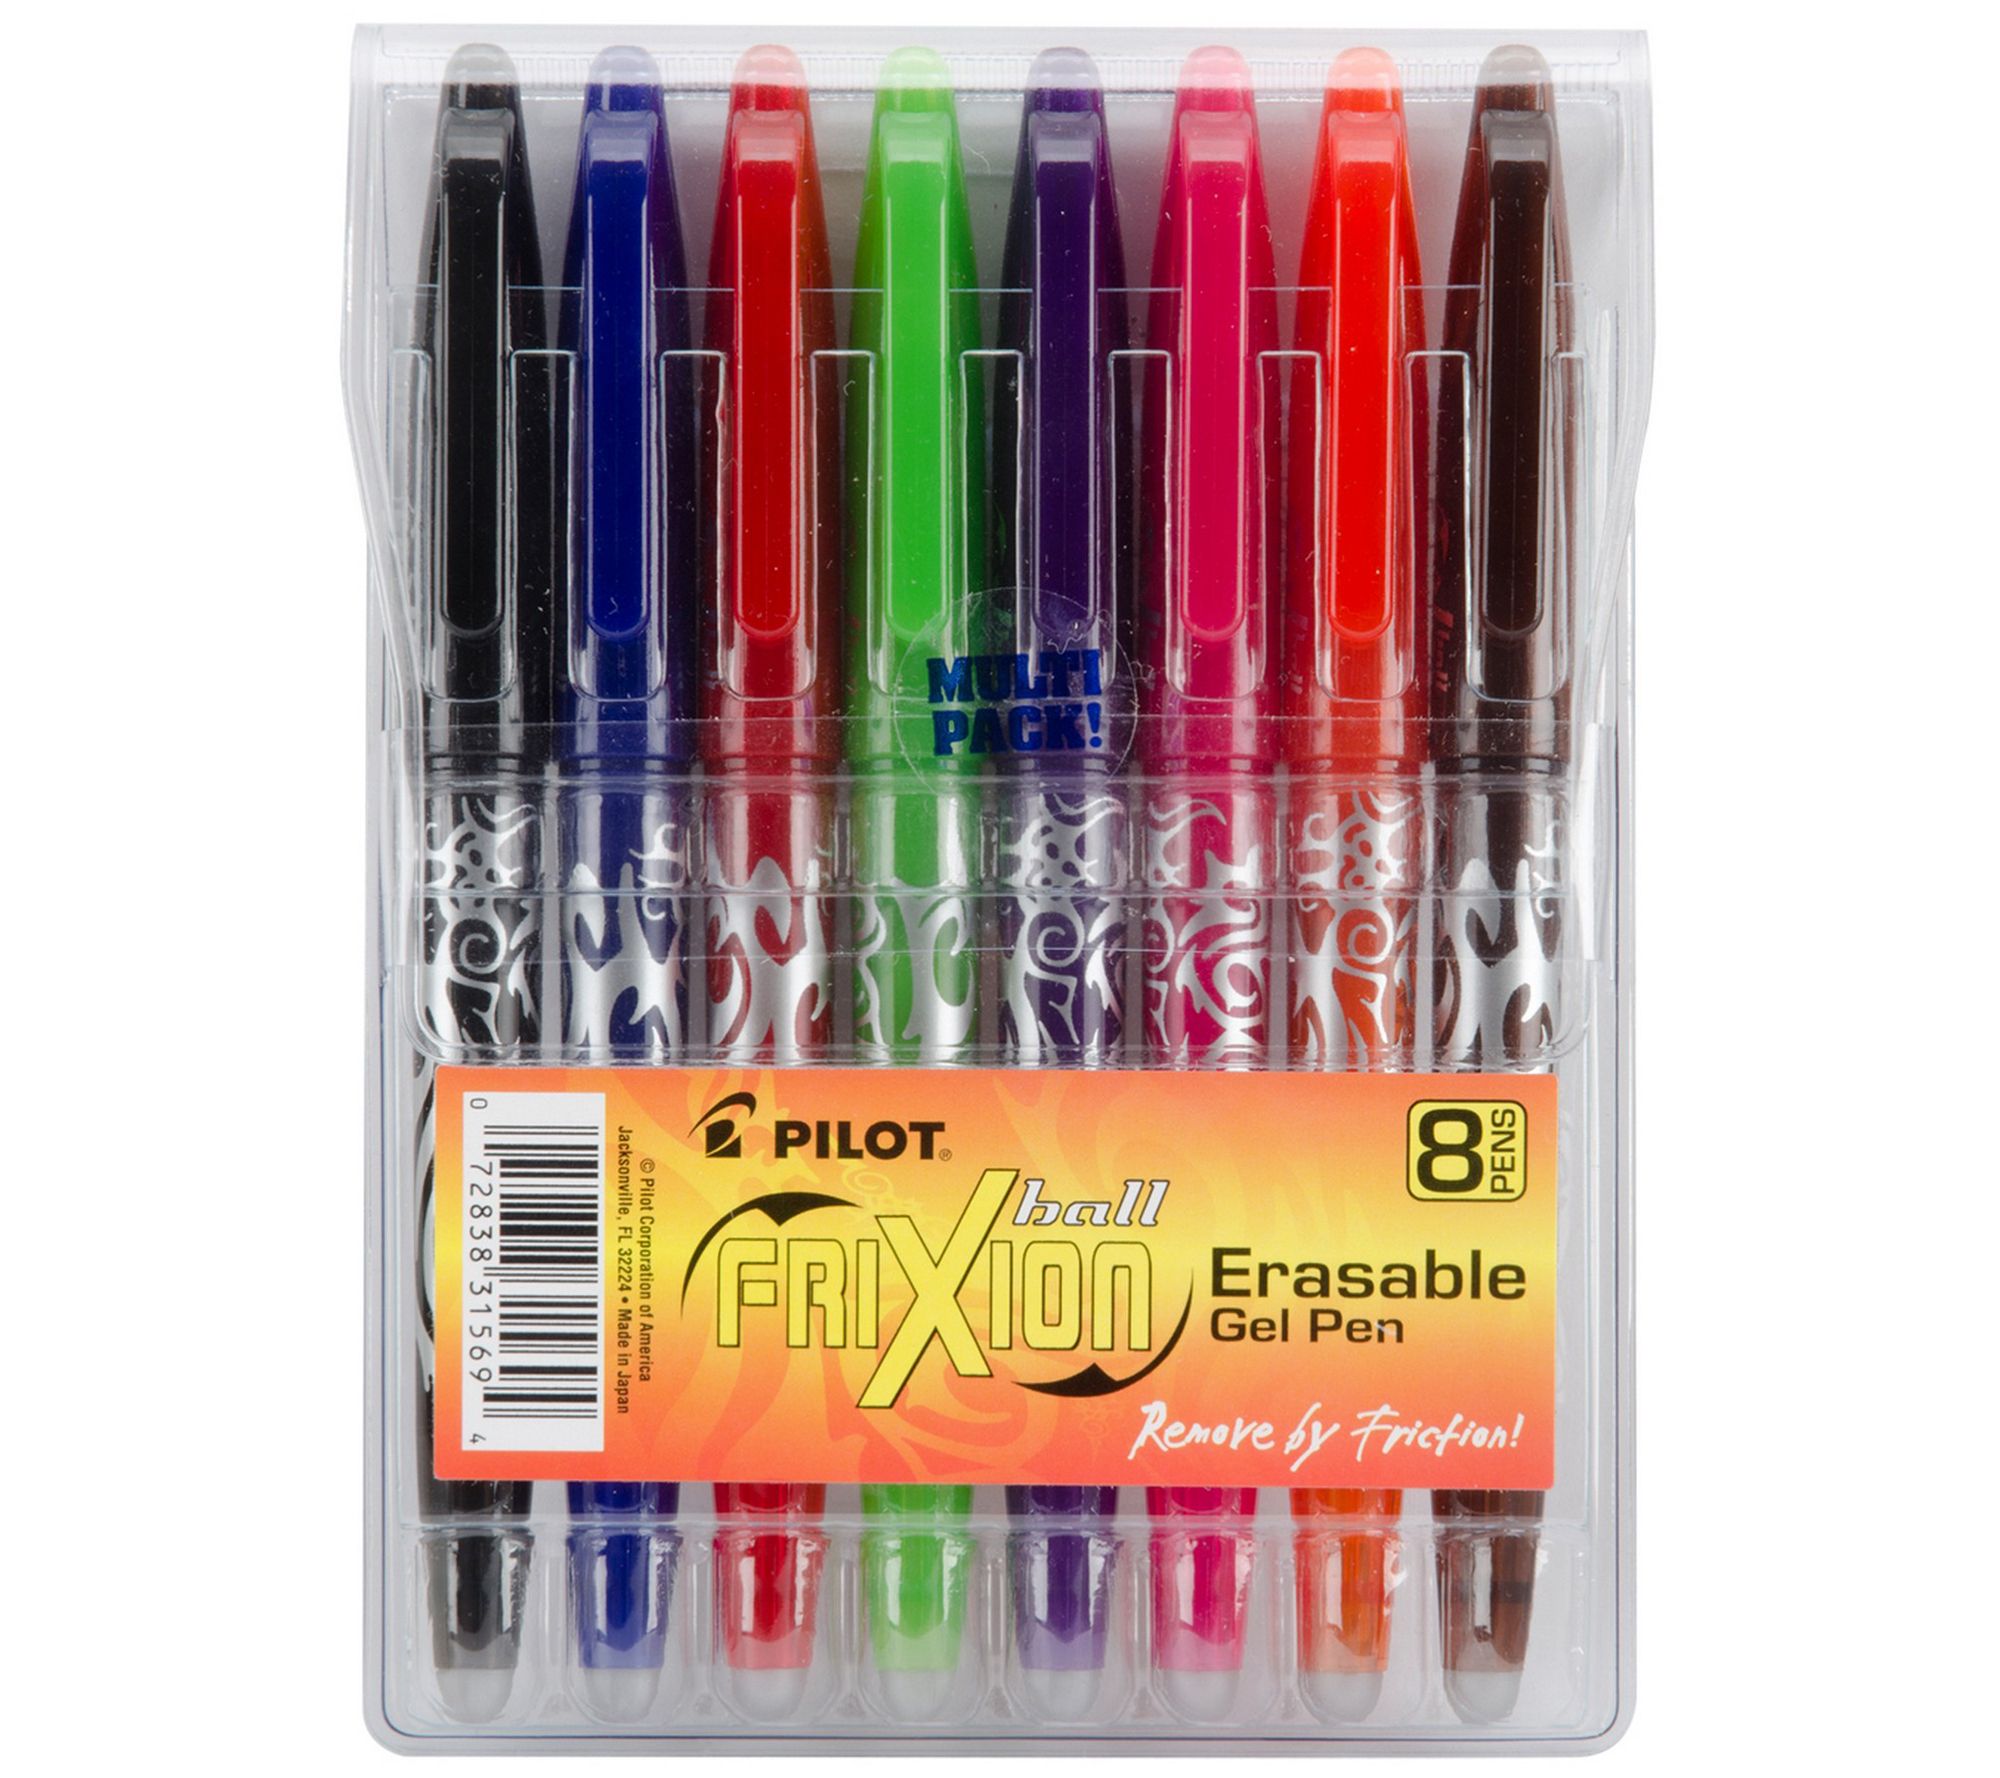 FriXion Ball Erasable Pens and Sets